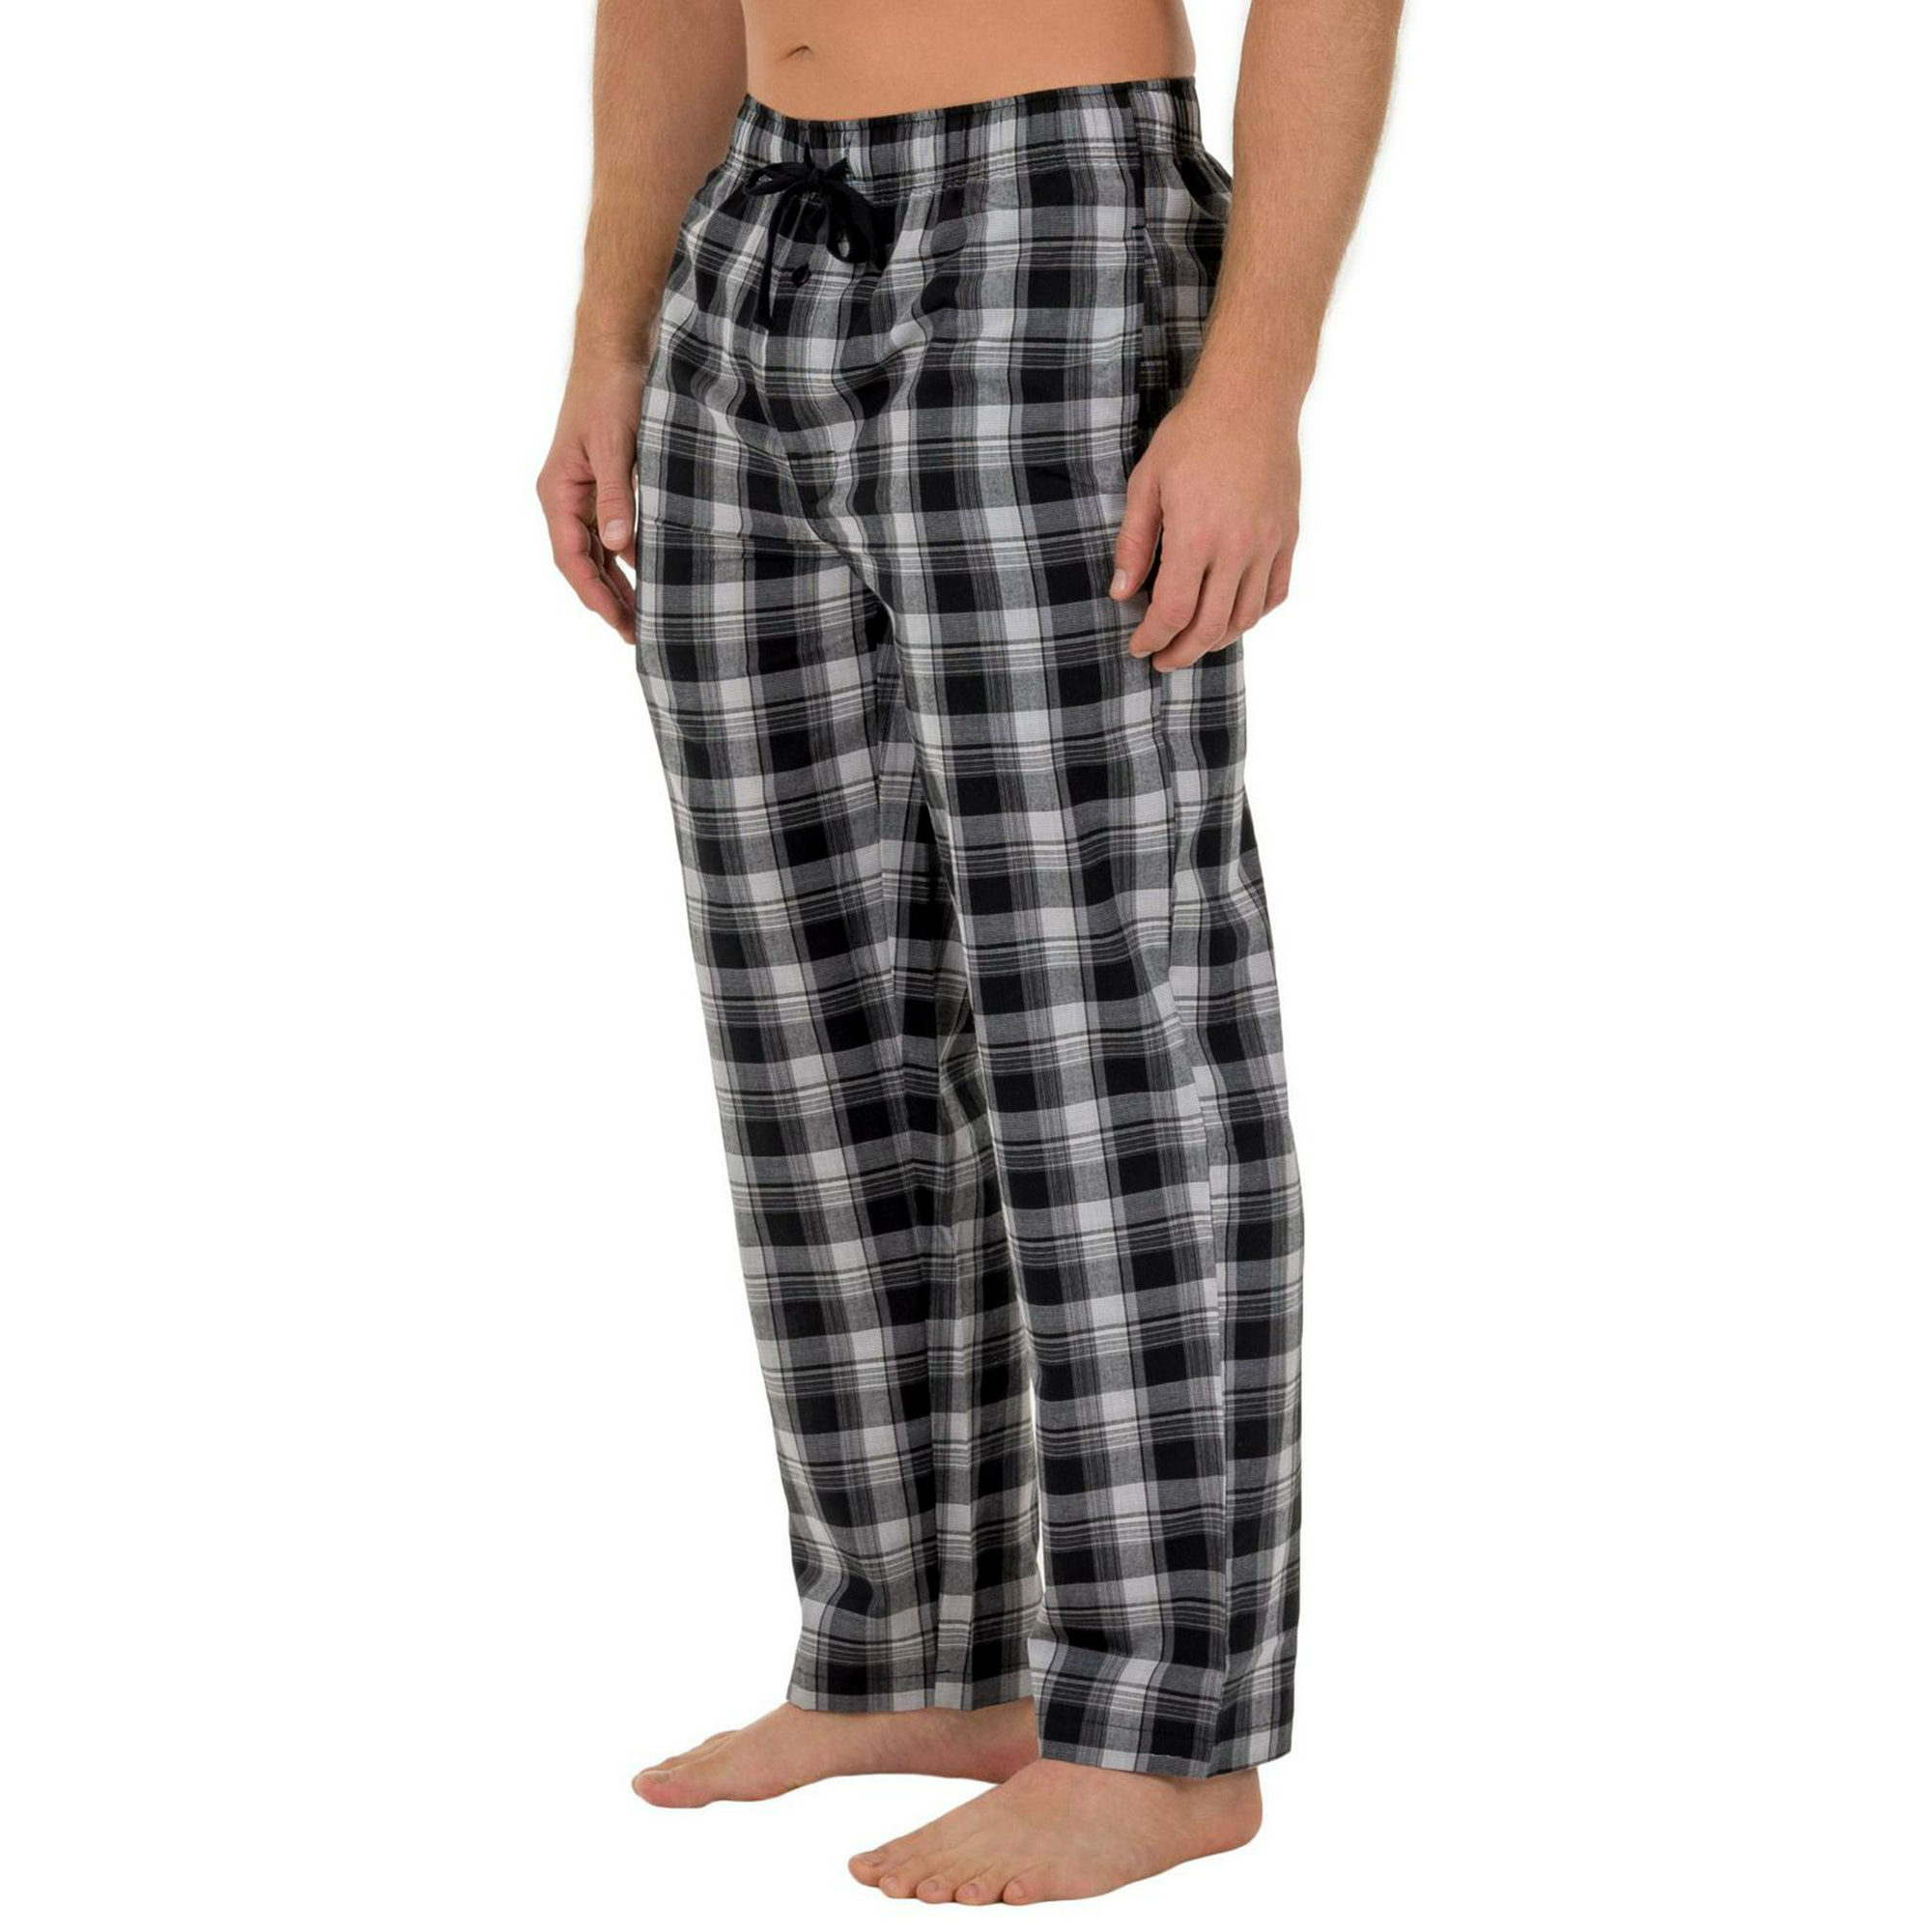 Shark Pajama Pants for Men Lightweight Sleep Lounge Pant with